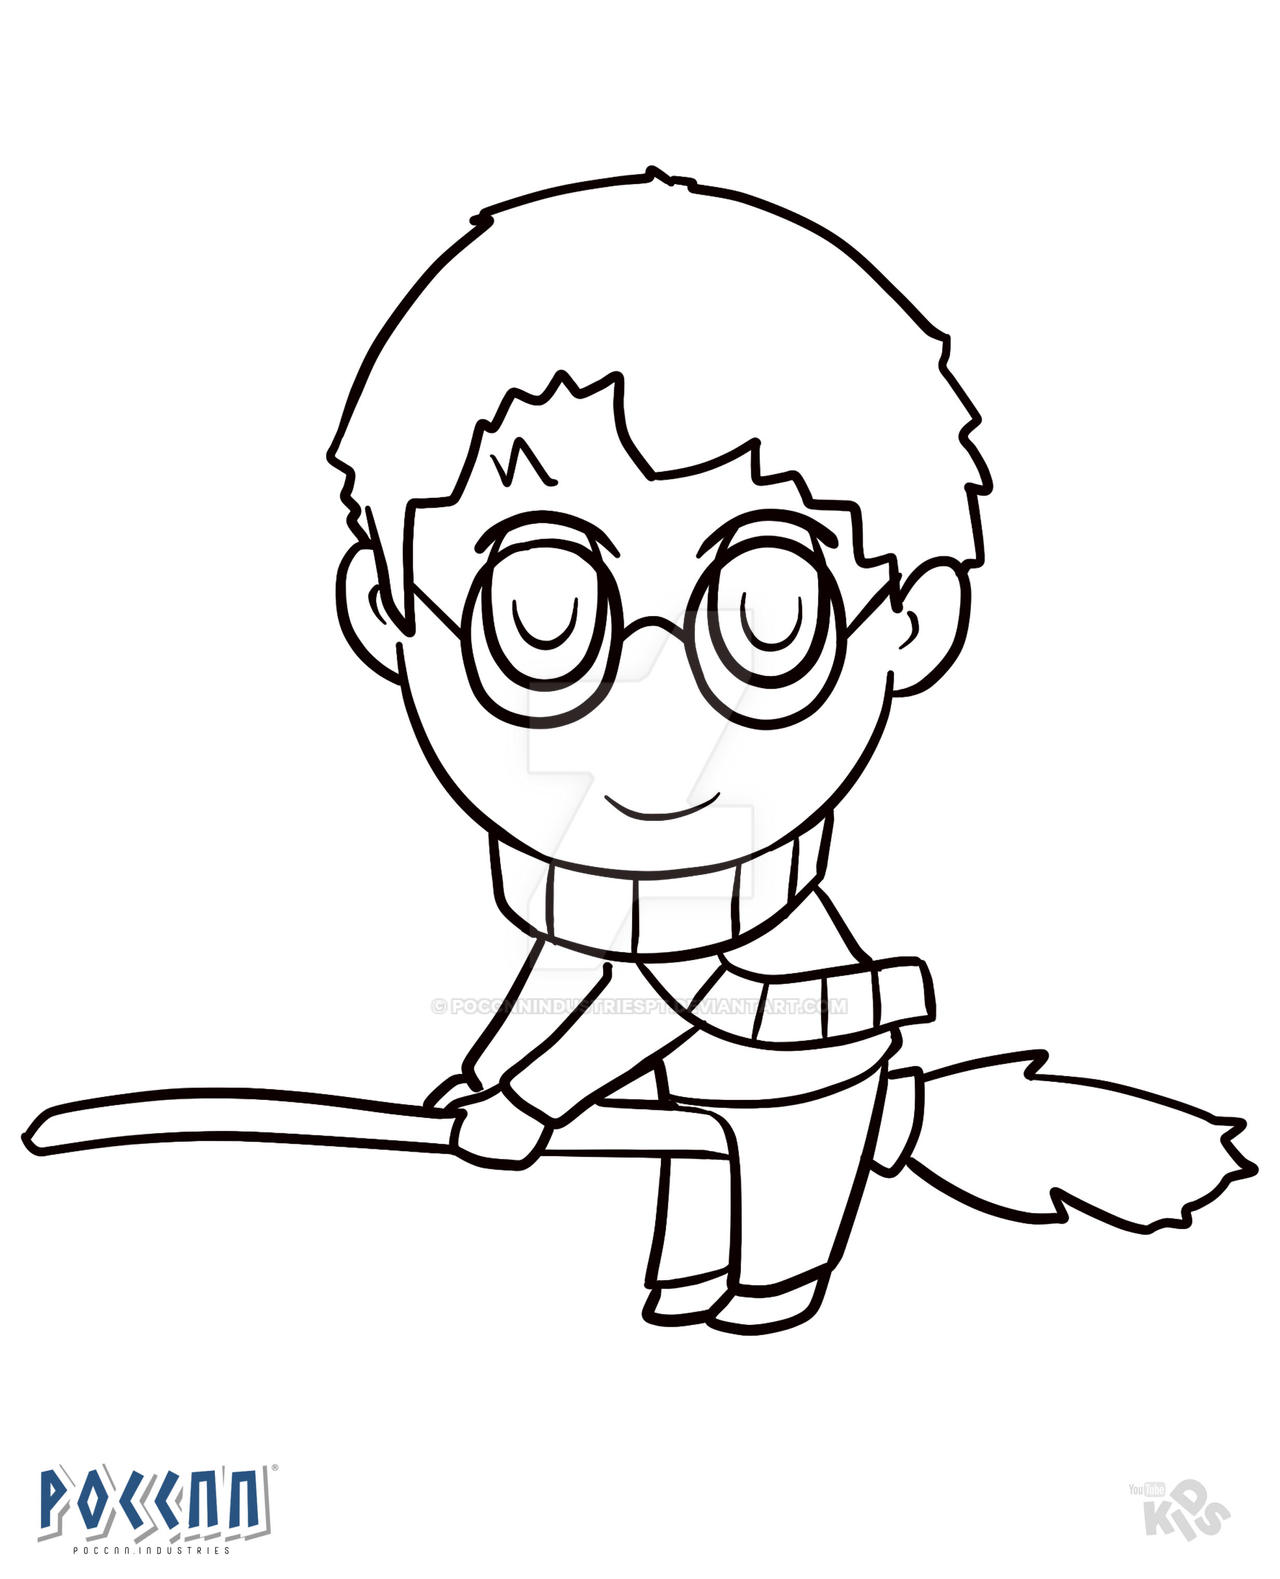 Harry Potter Chibi para colorir by PoccnnIndustriesPT on DeviantArt